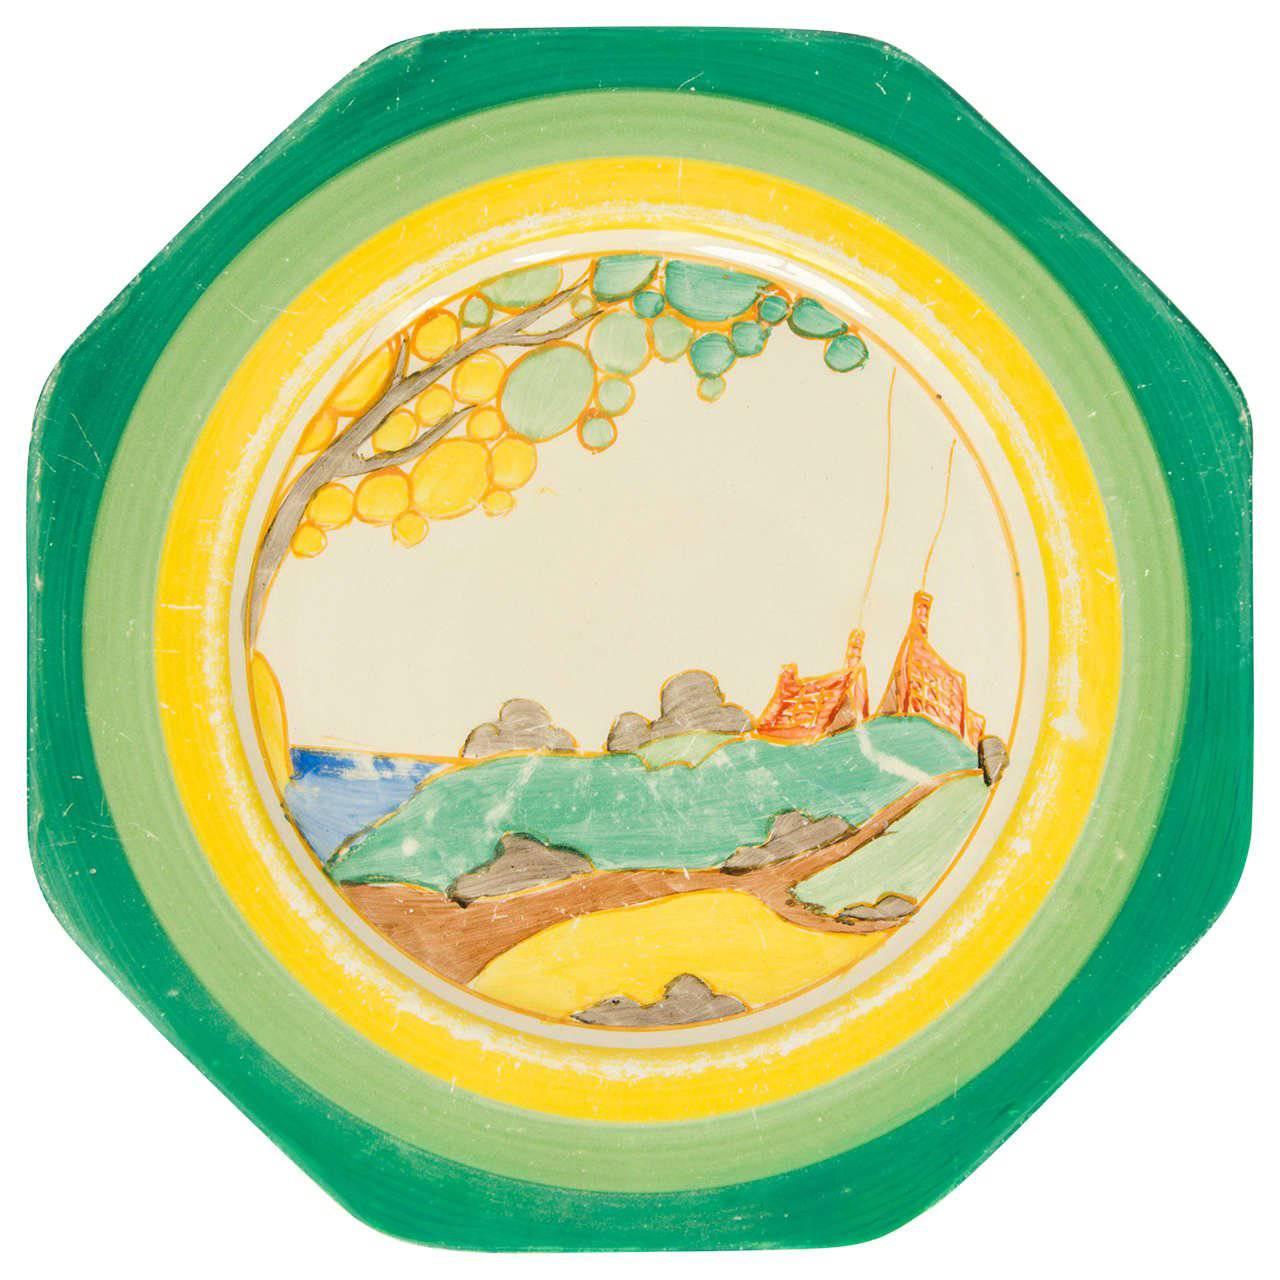 Clarice Cliff, Plate, Bizarre Range, "Secrets" Pattern, circa 1933-1937